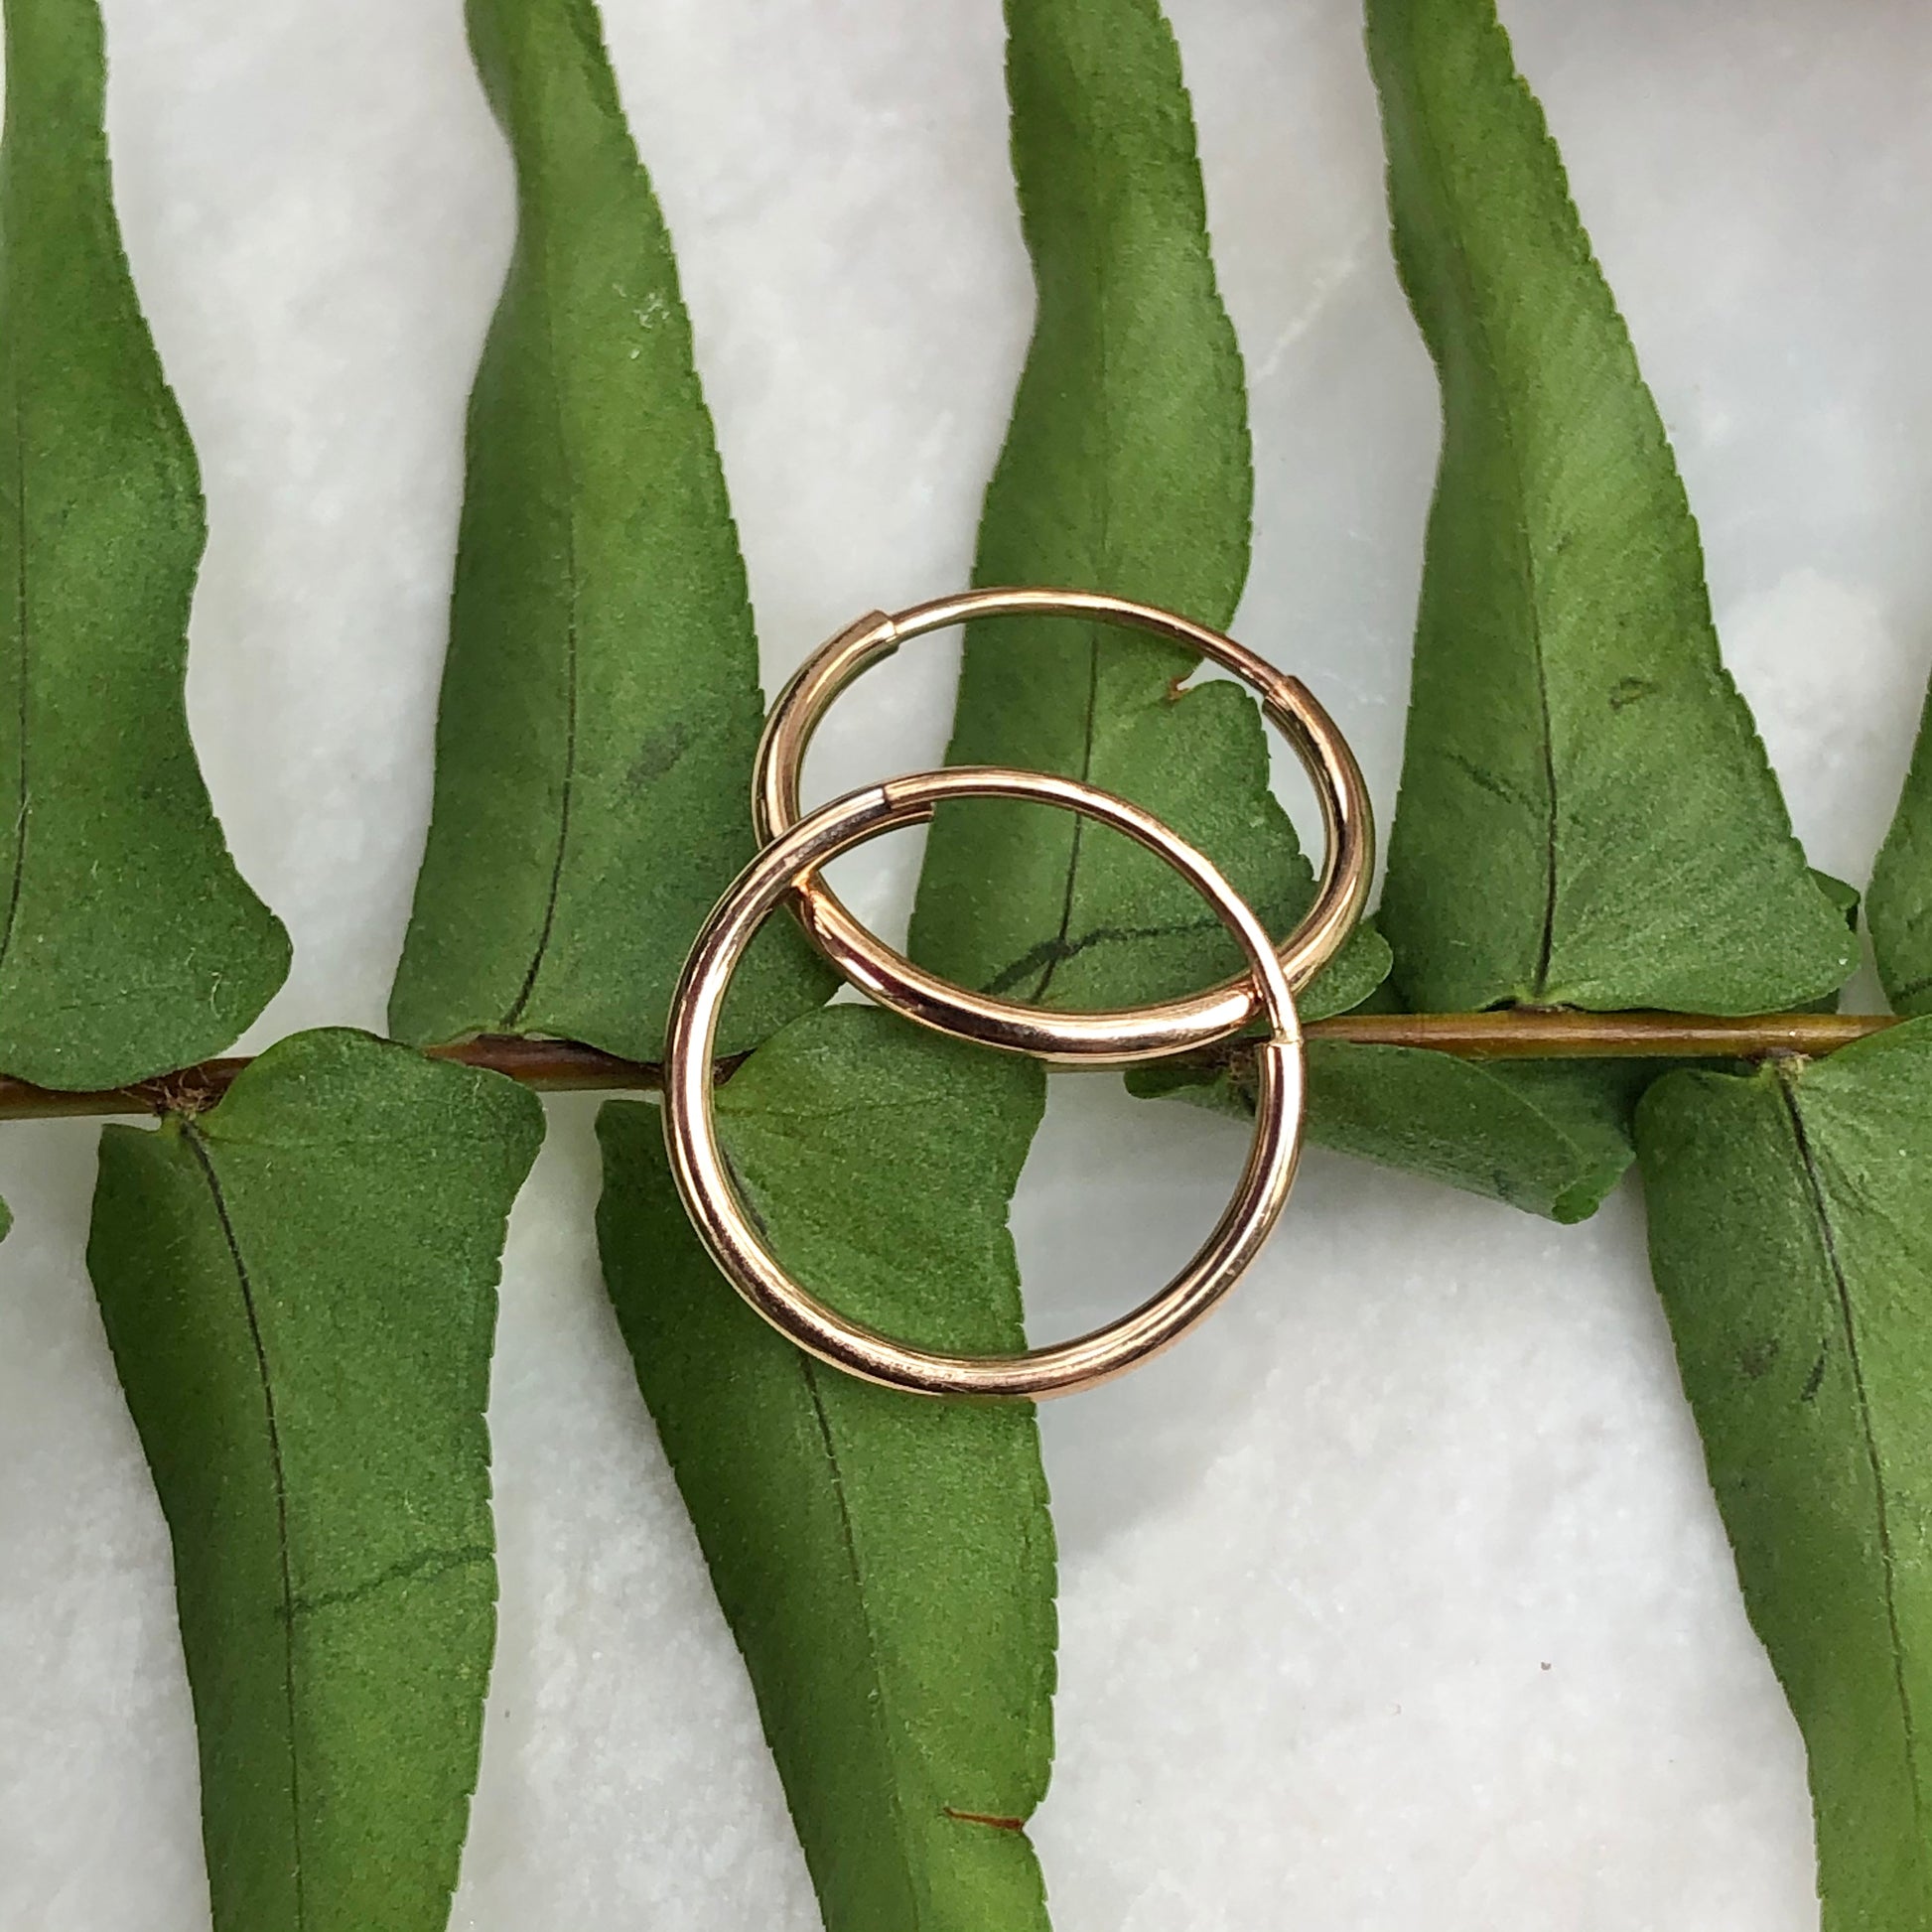 14KT Rose Gold Thin 1.5mm Endless Hoop Earrings 14mm - Legacy Saint Jewelry